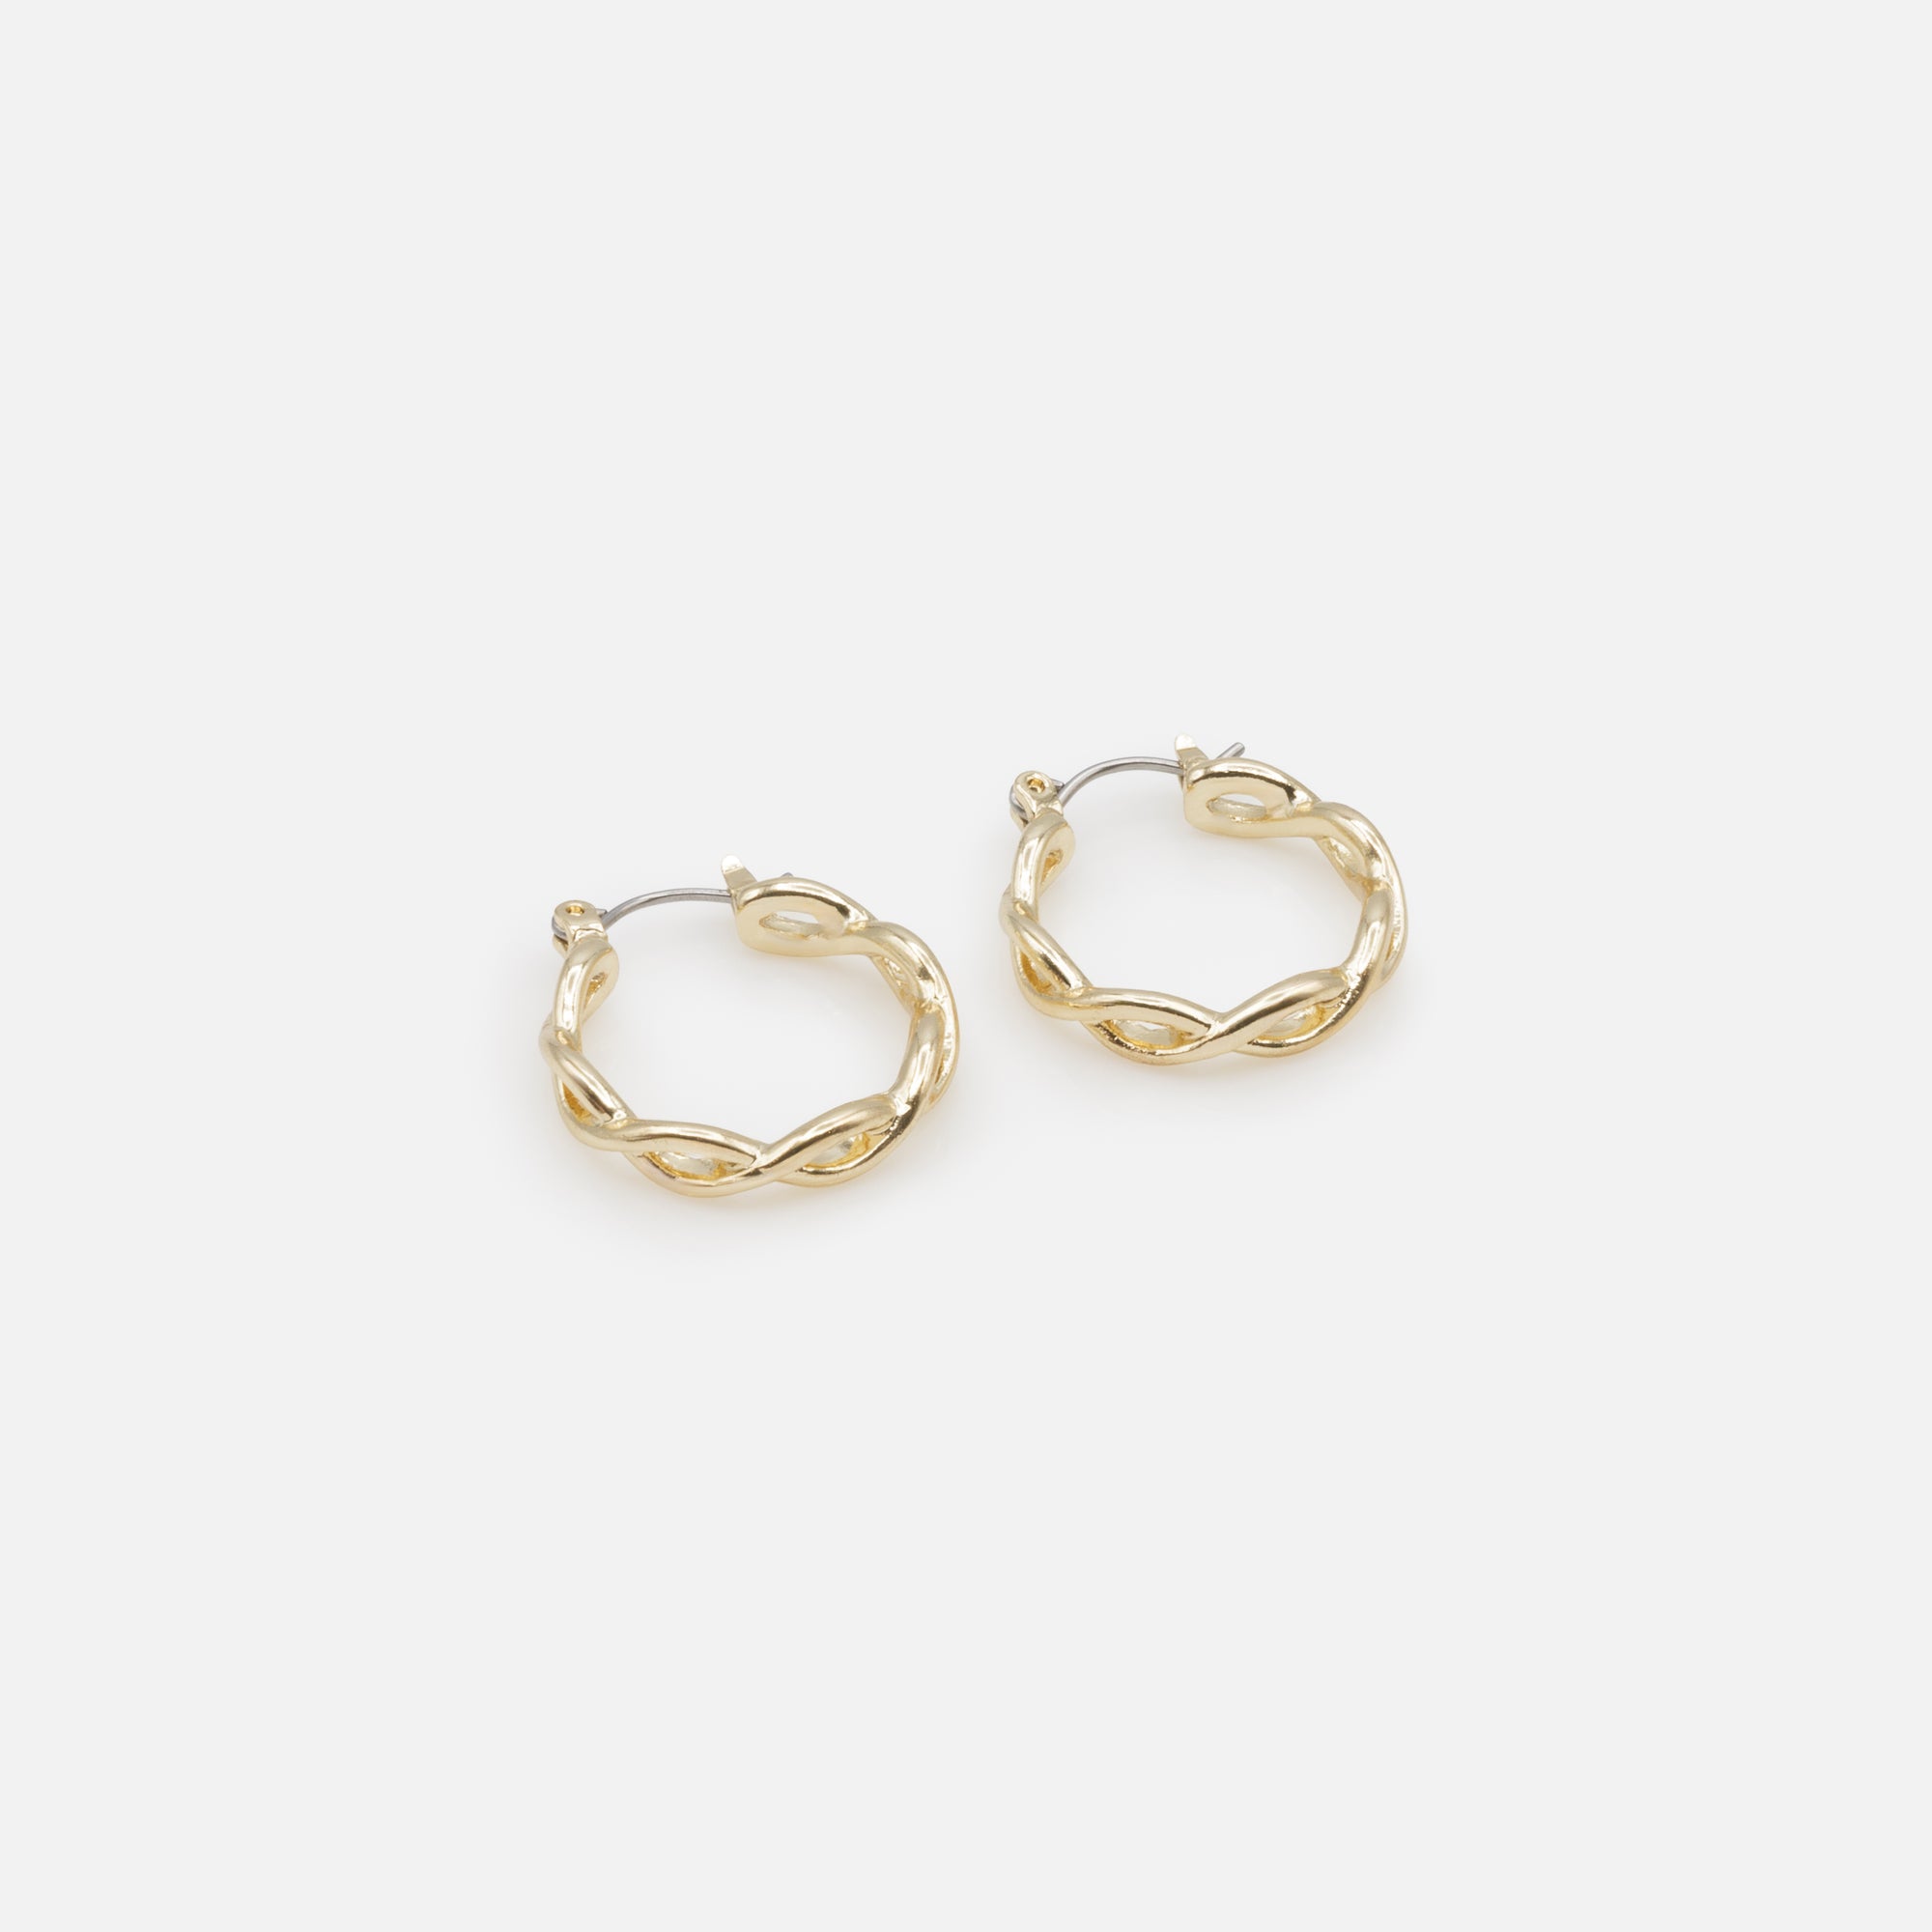 Duo of crisscrossed and recessed golden hoop earrings